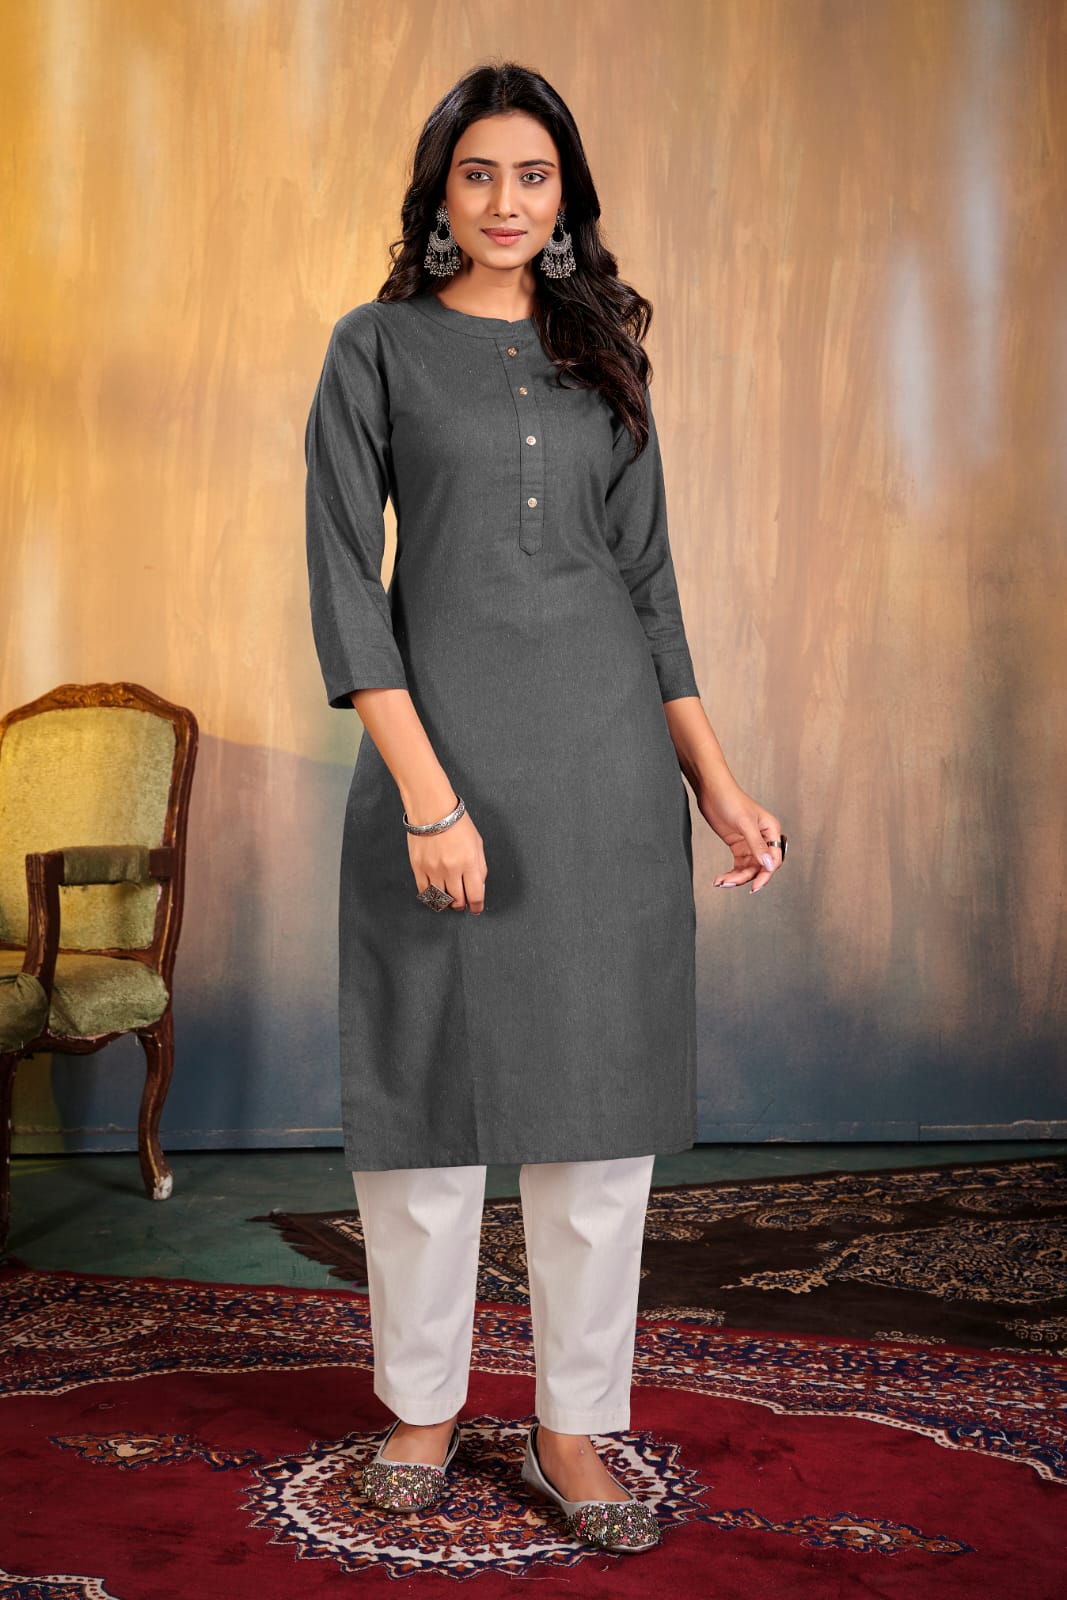 Ahaana krishna | Stylish dresses for girls, Classy girl fashion, Simple  frock design